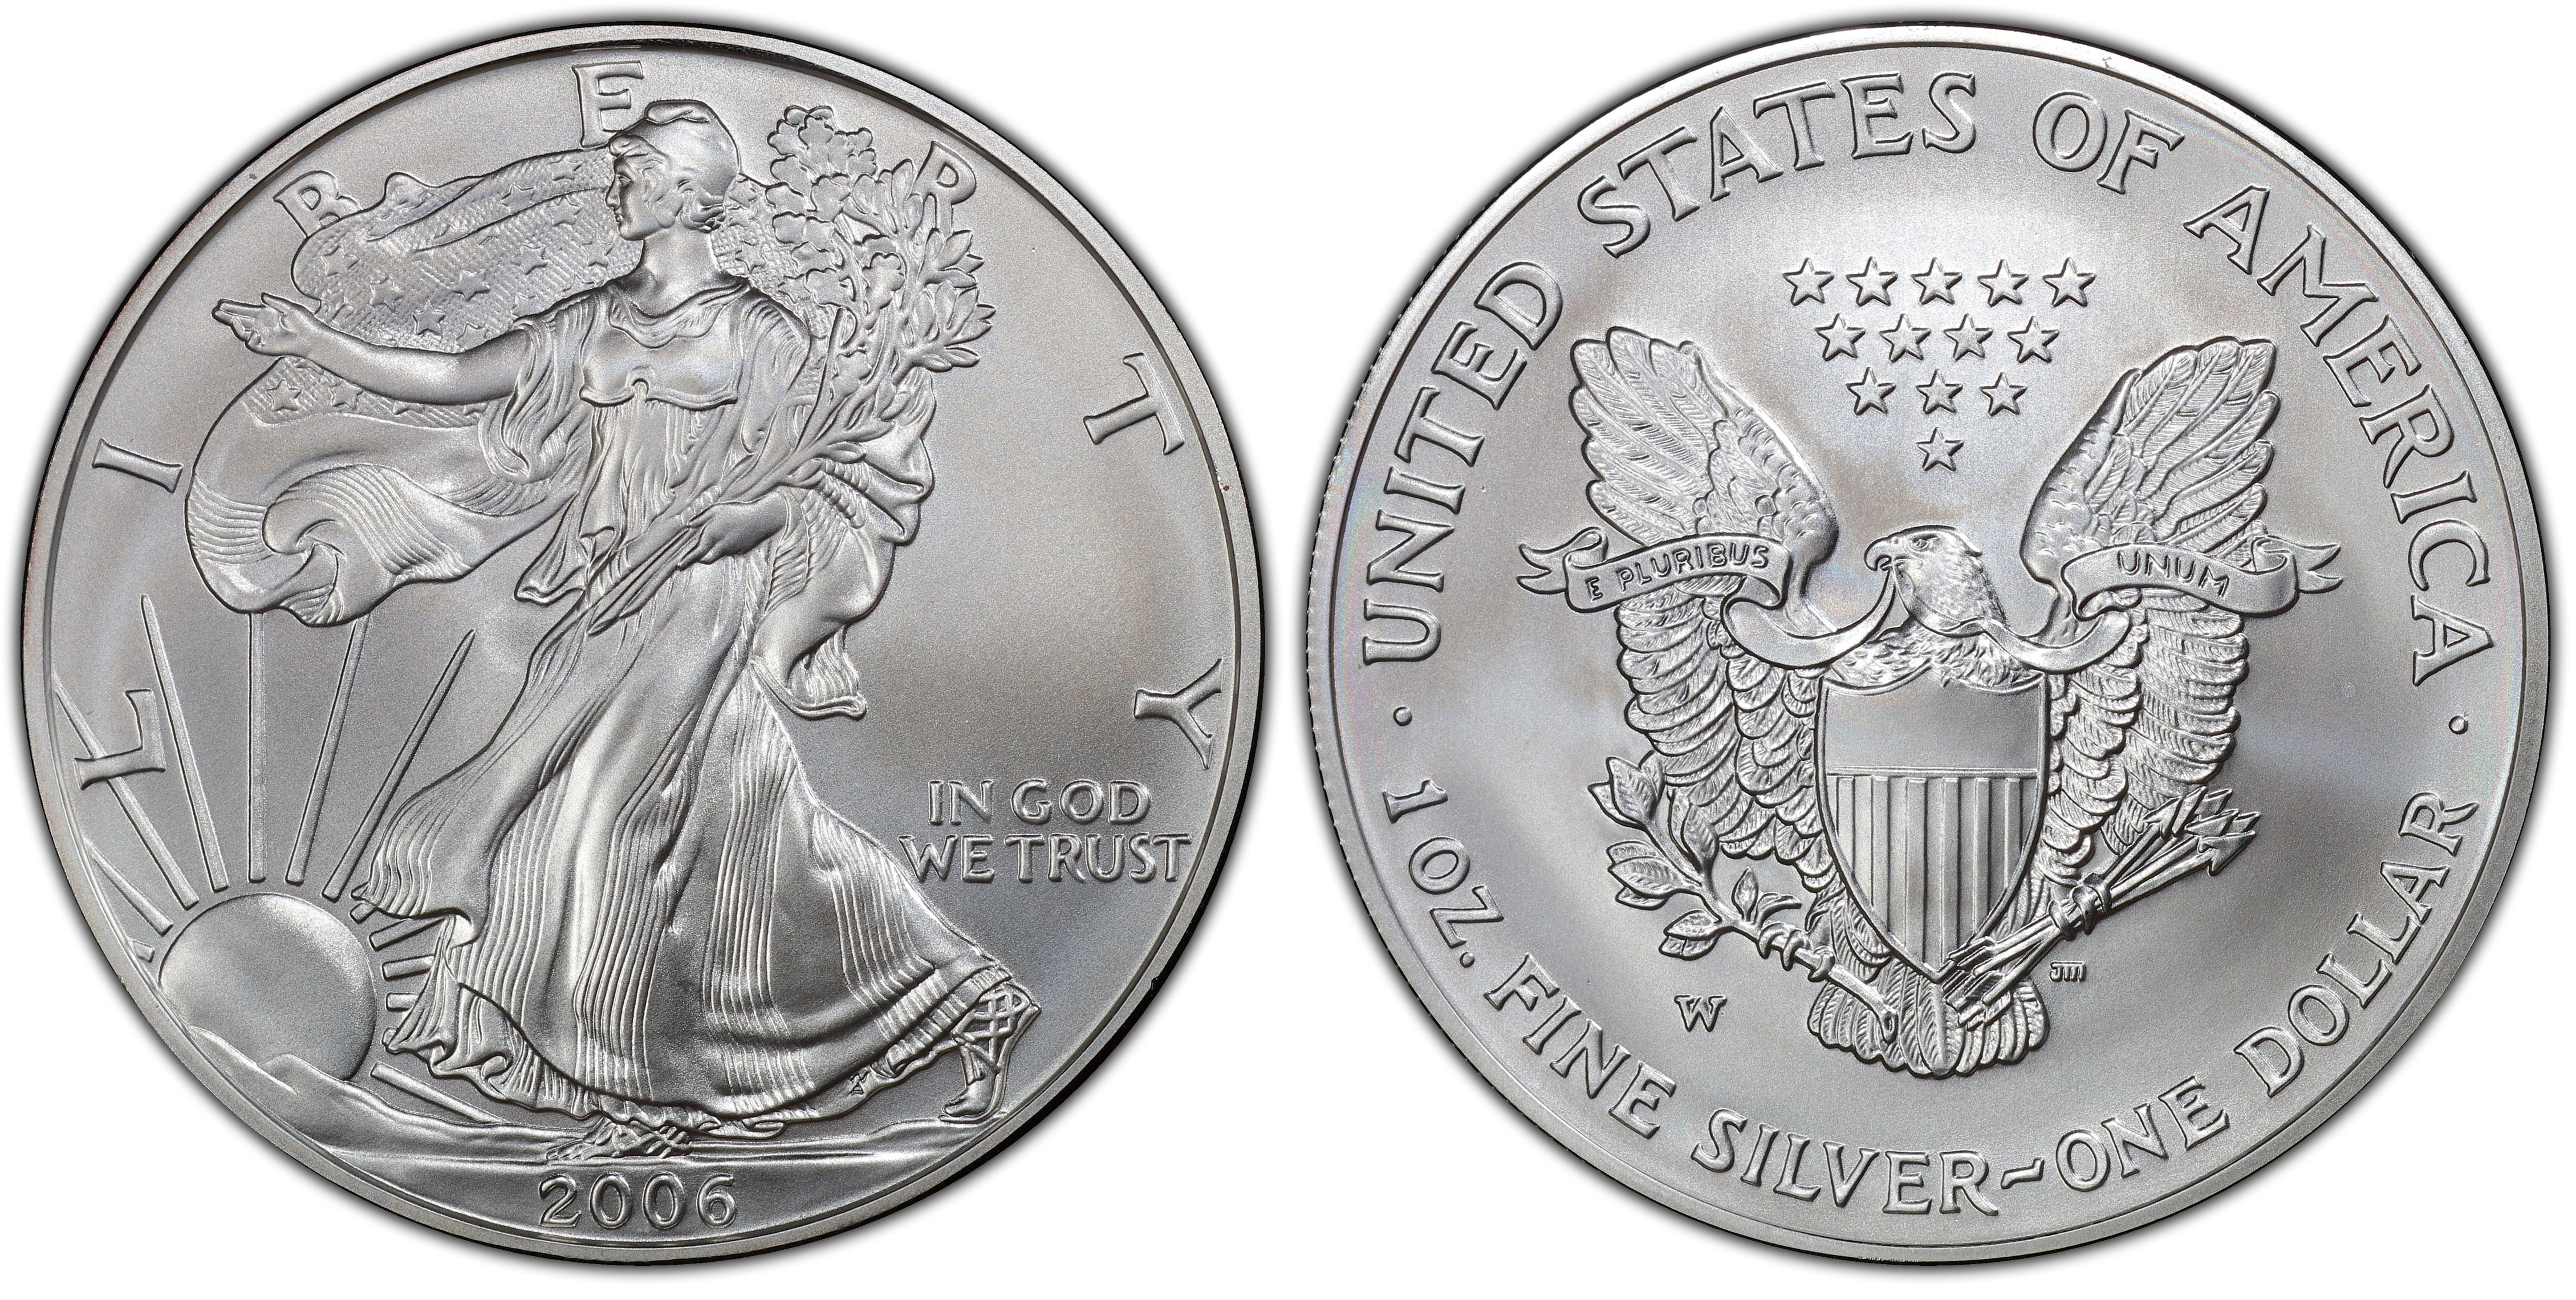 2007-W $1 Burnished Silver Eagle SP70 PCGS John Mercanti